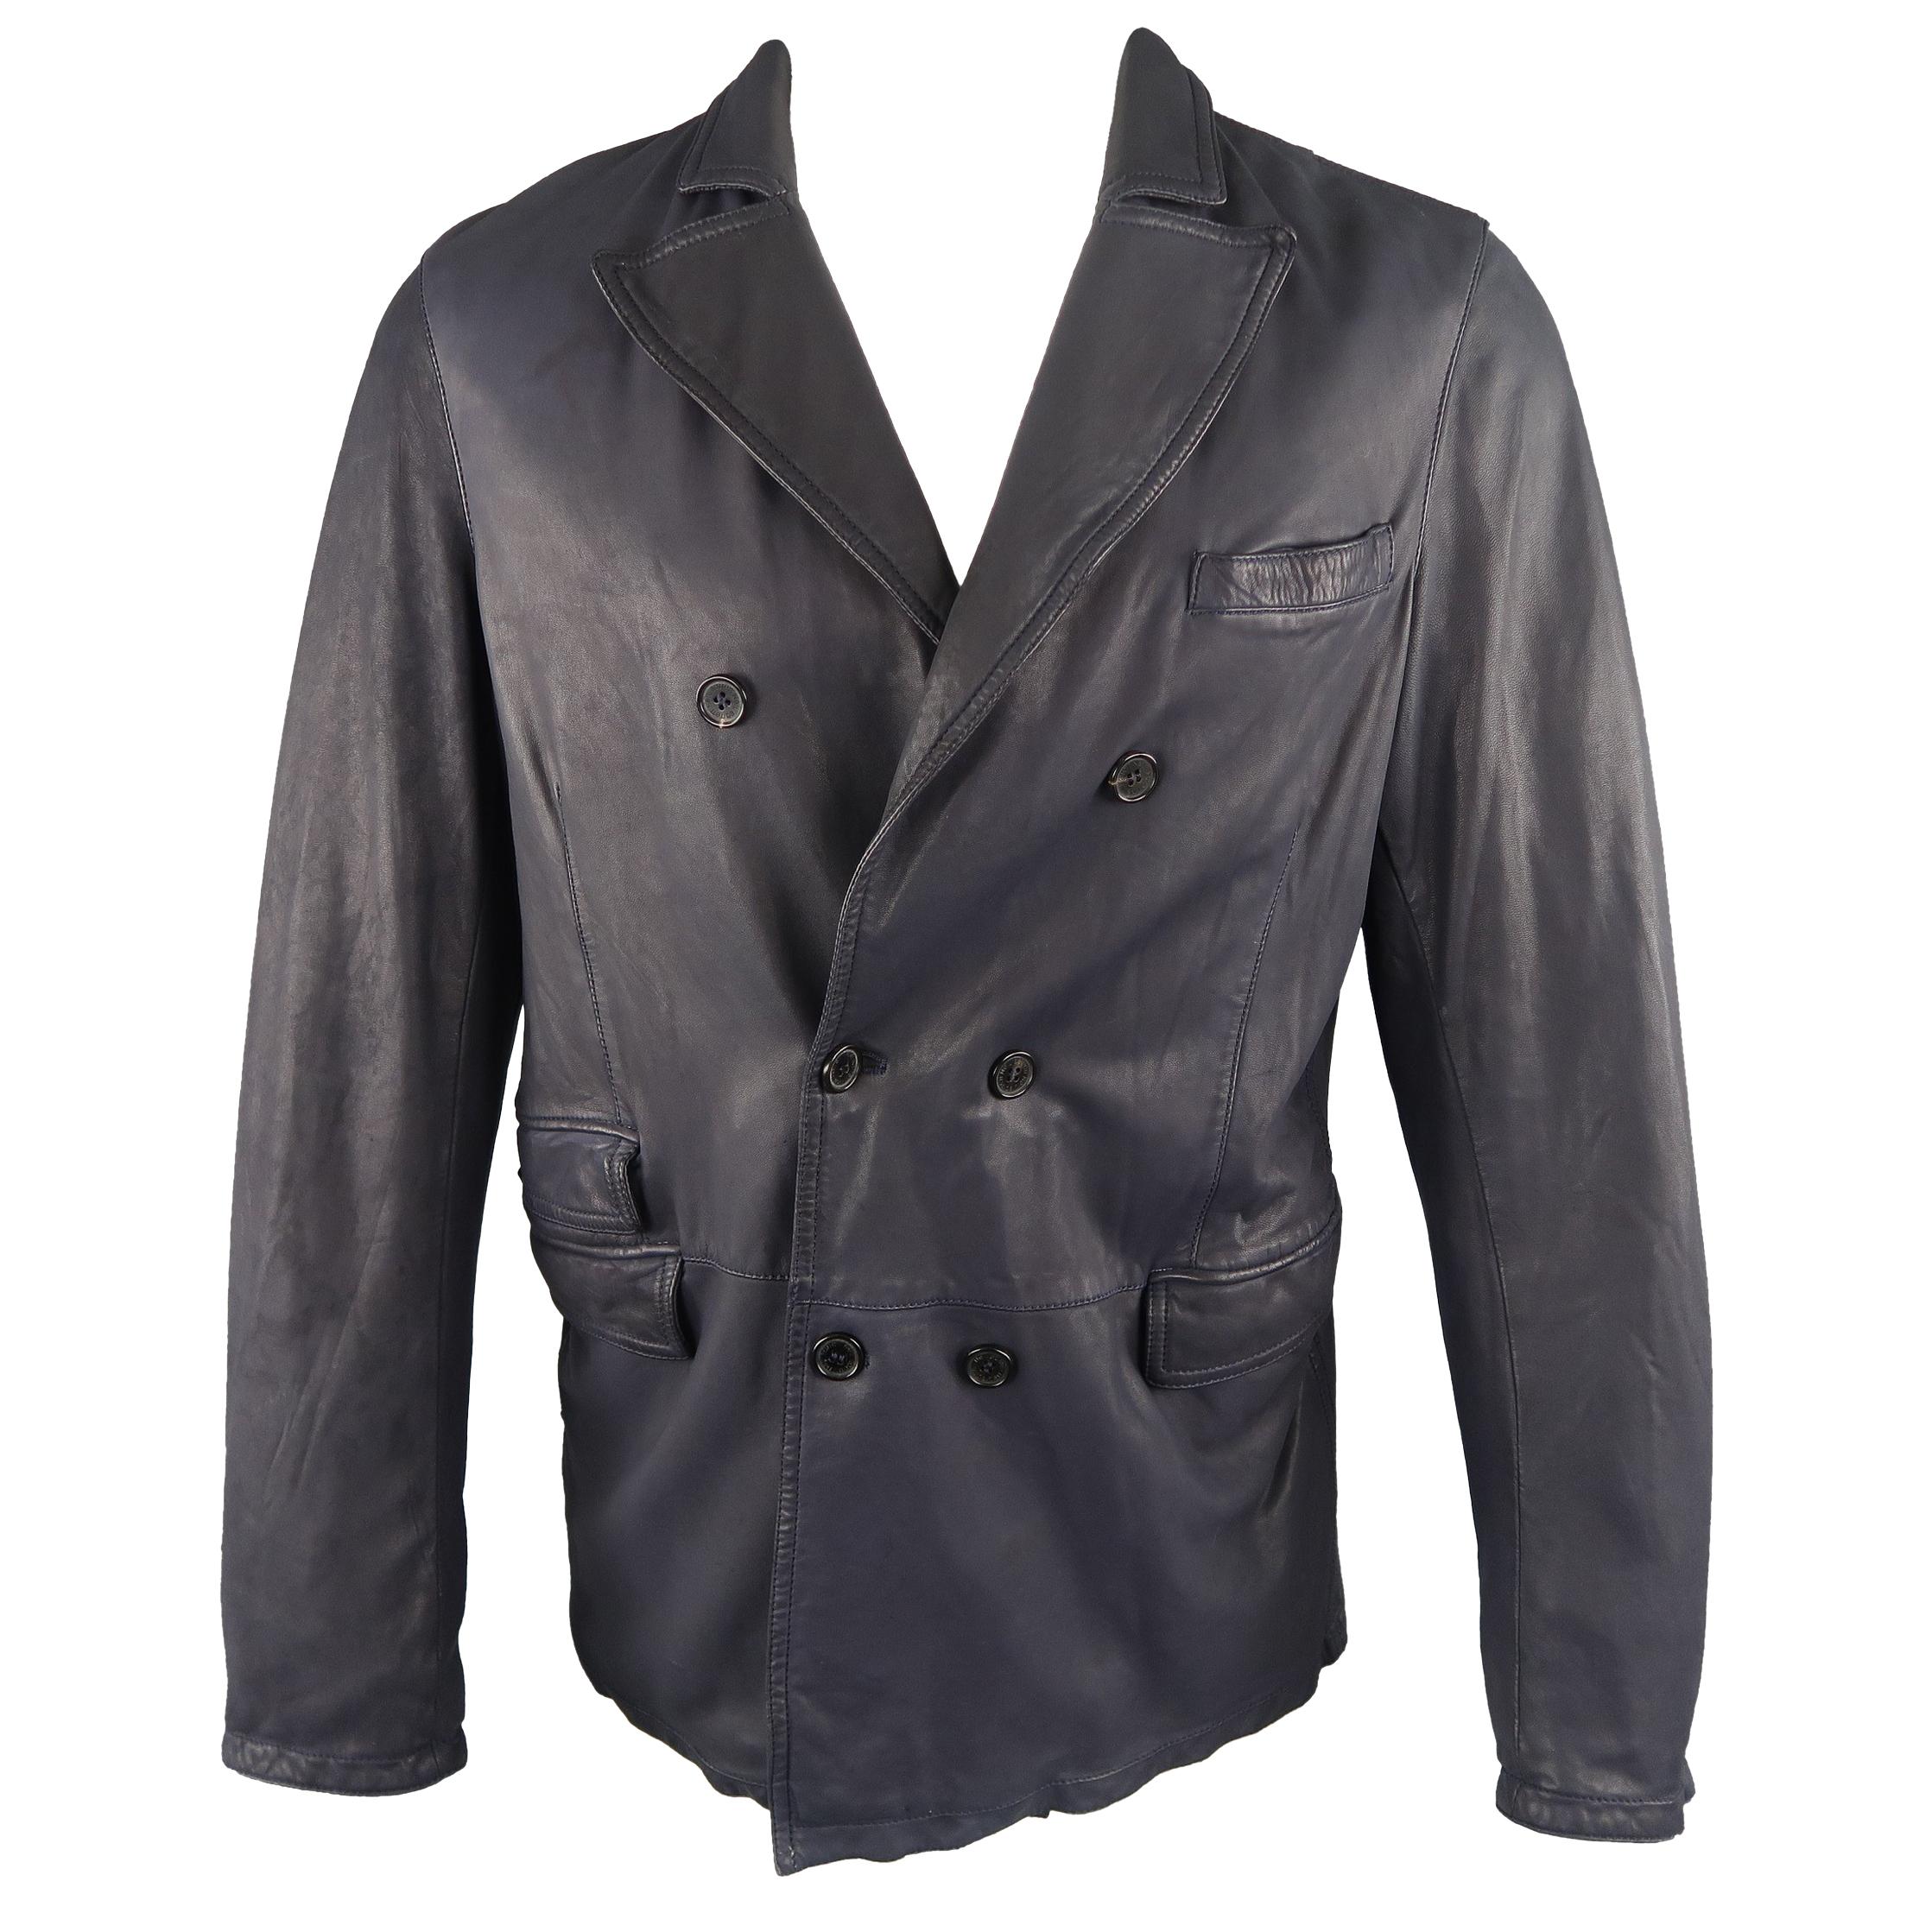 NEIL BARRETT Jacket M Navy Leather Double Breasted Sport Coat Jacket